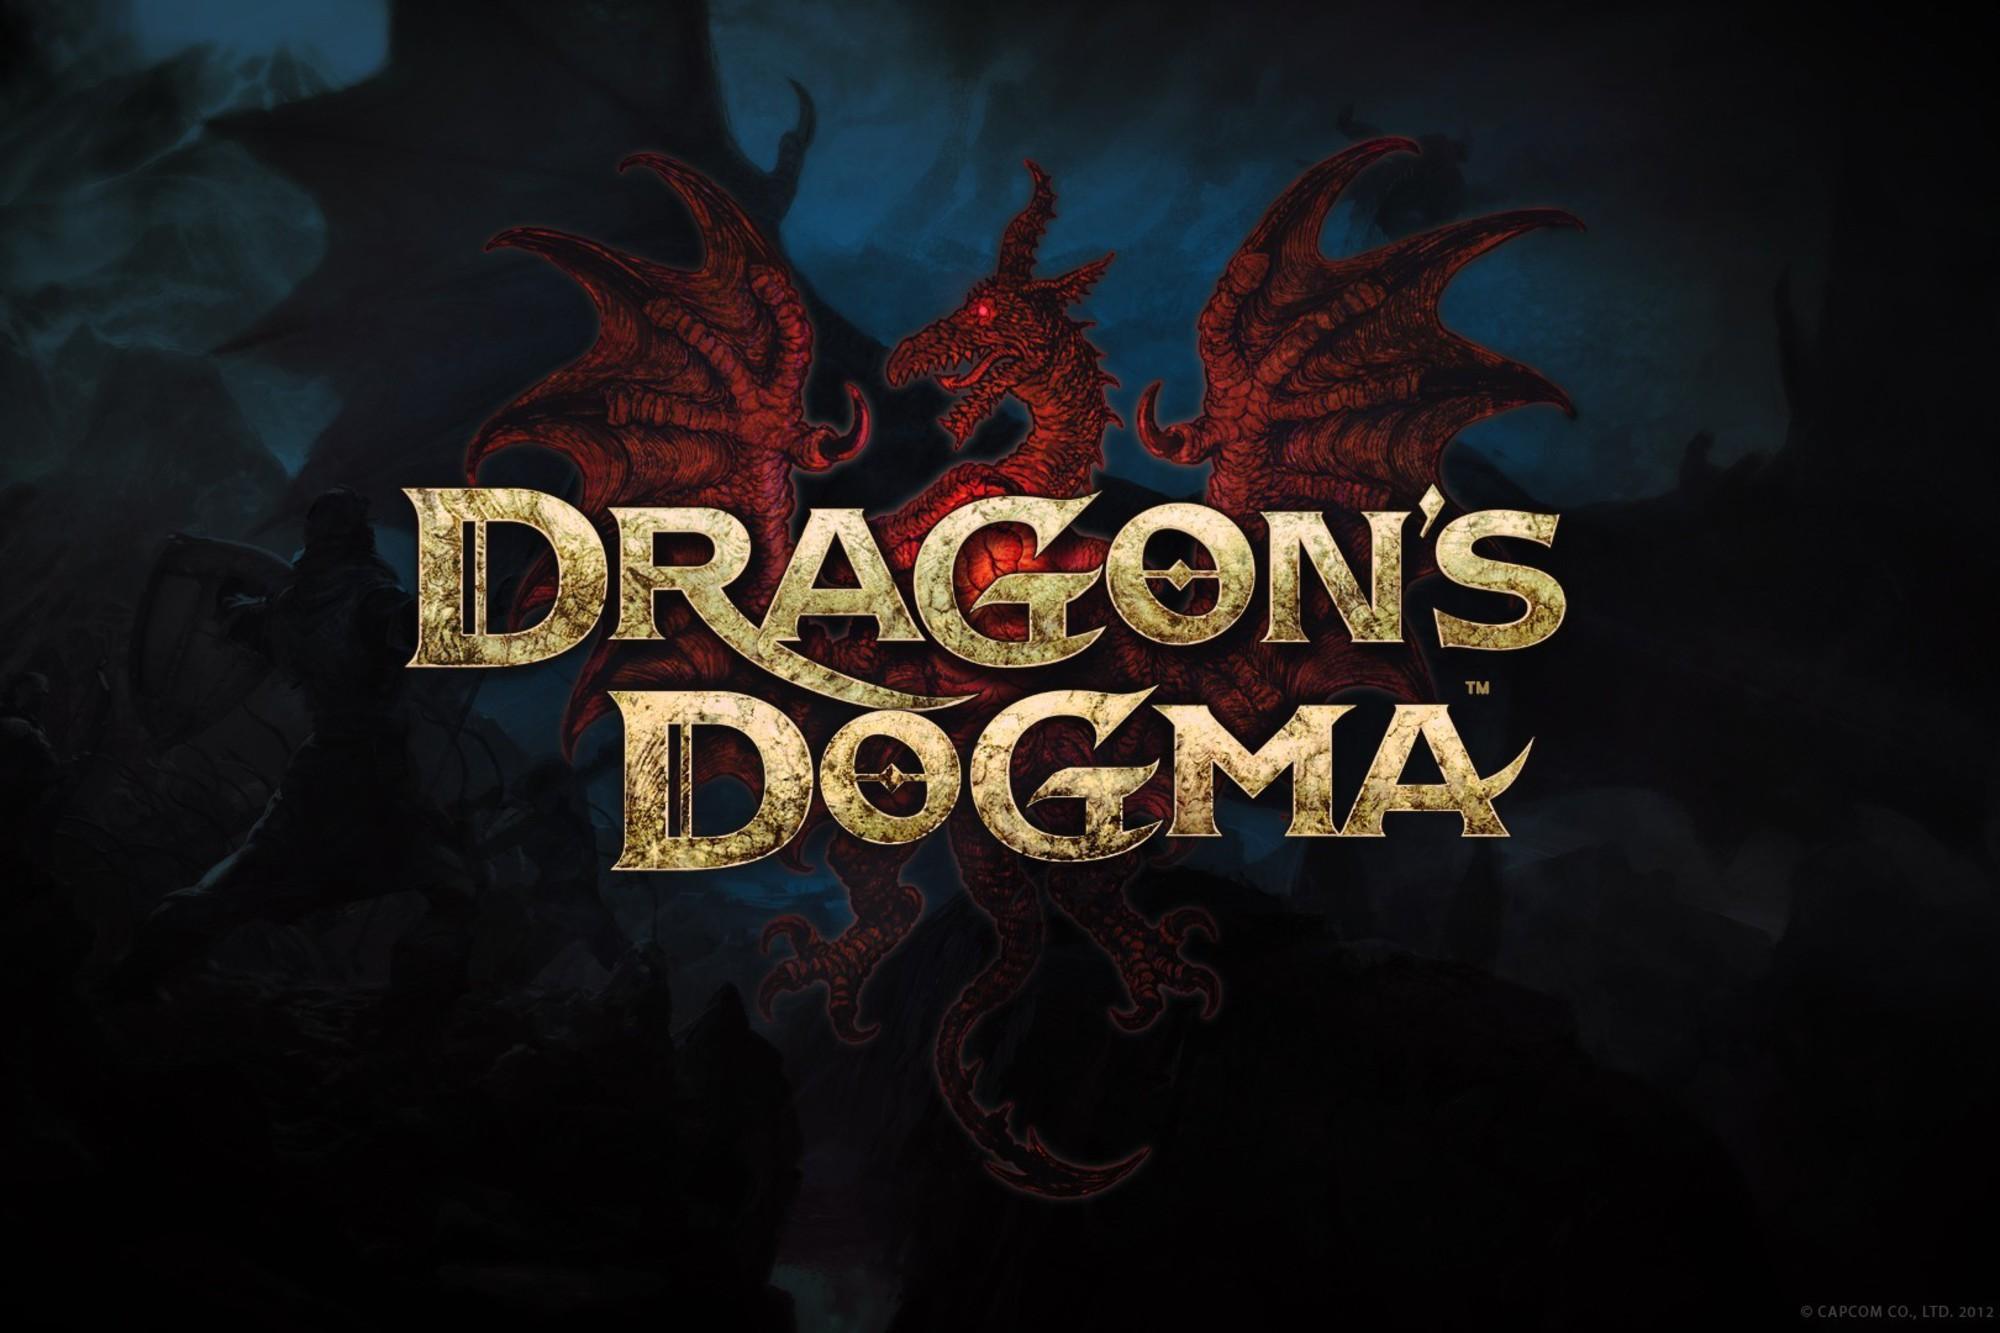 Драгон догма дракон. Драгонс Догма 1. Dragon's Dogma: Dark Arisen. Догма дракона игра. Драгонс Догма 2012.